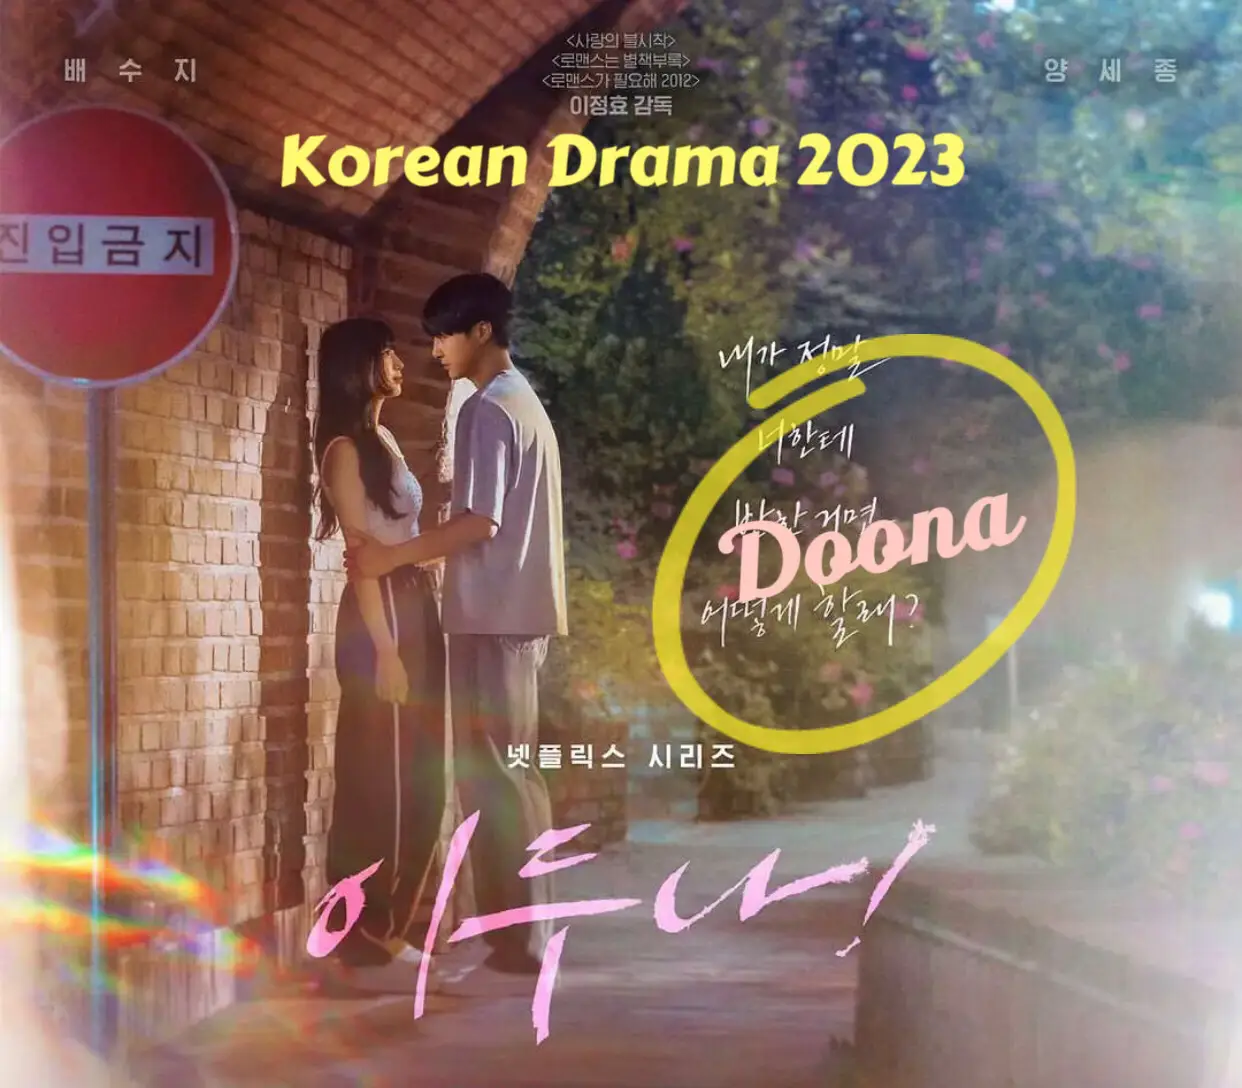 Bae Doona in talks to star in K-drama thriller 'Family Plan